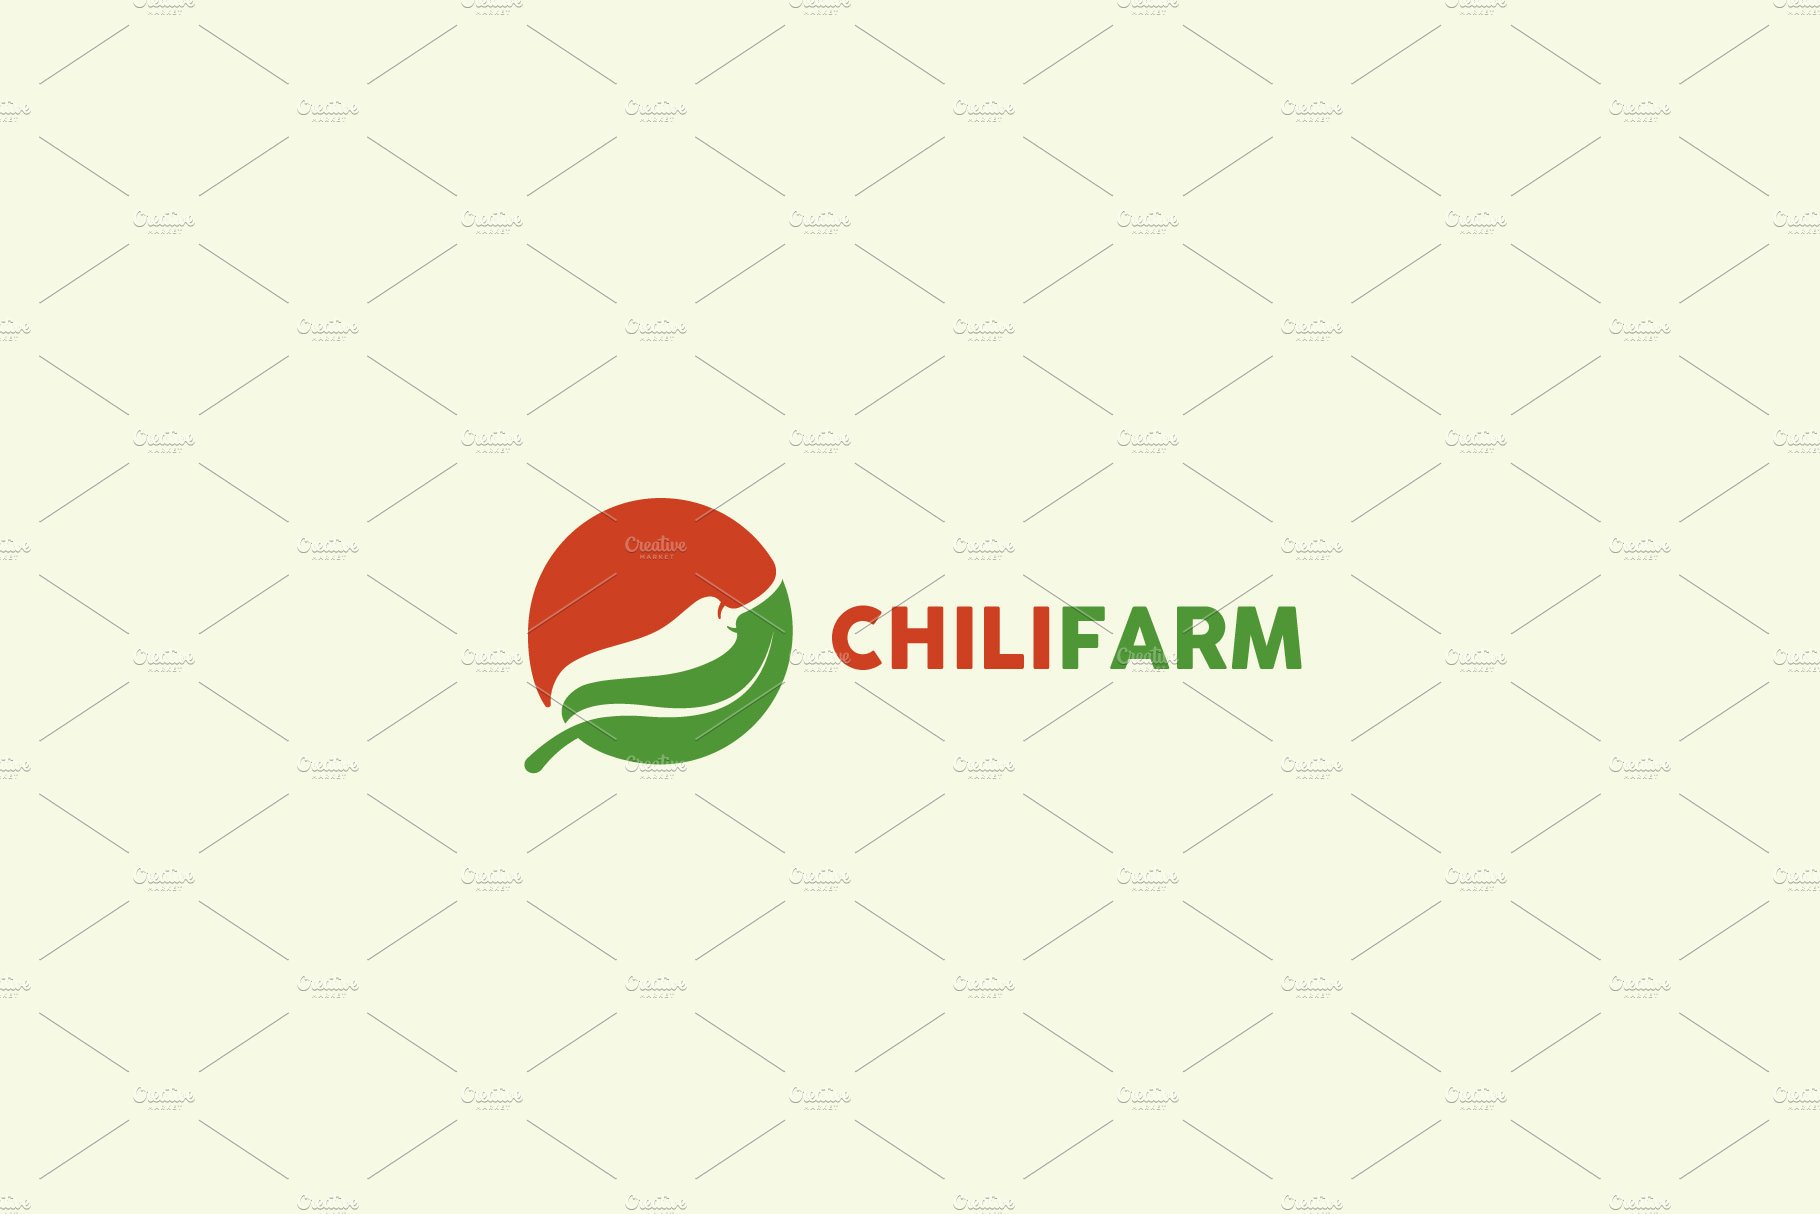 chili farm logo cover image.